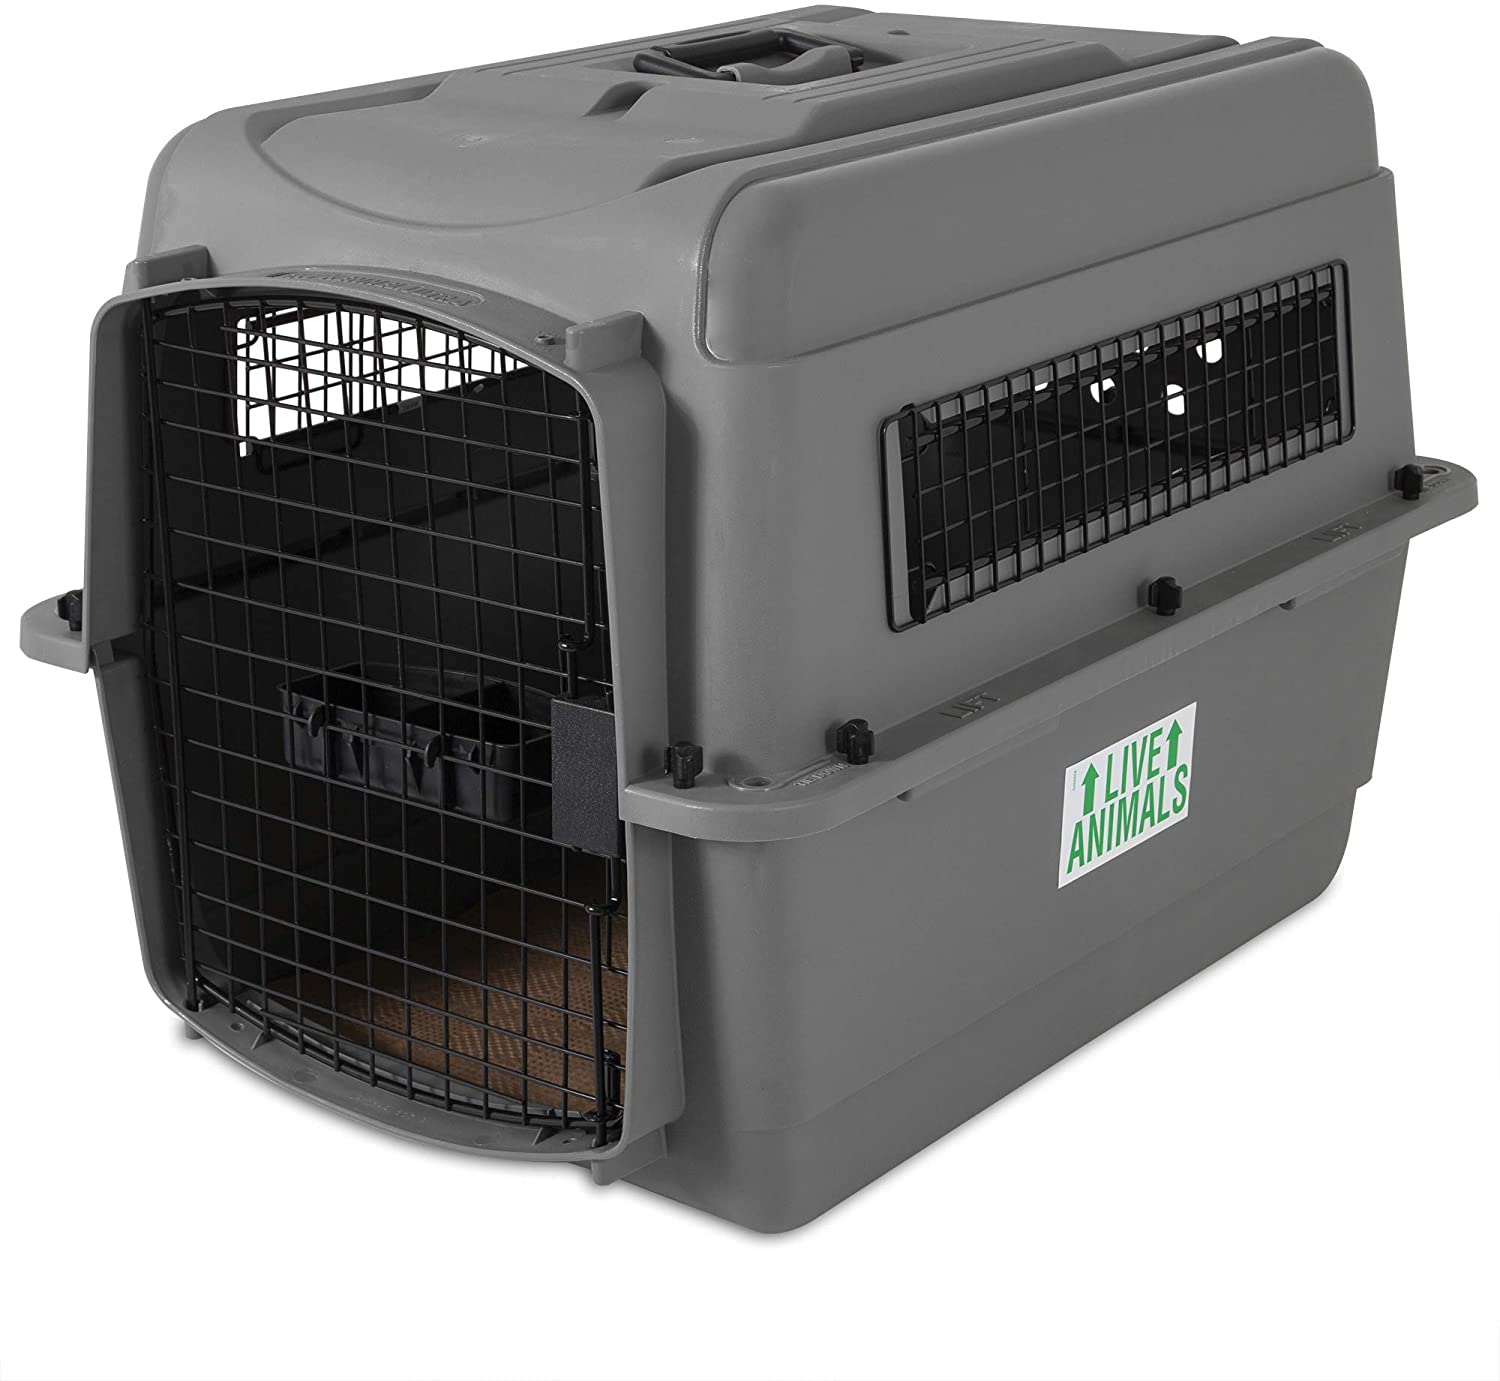 best dog travel crate uk